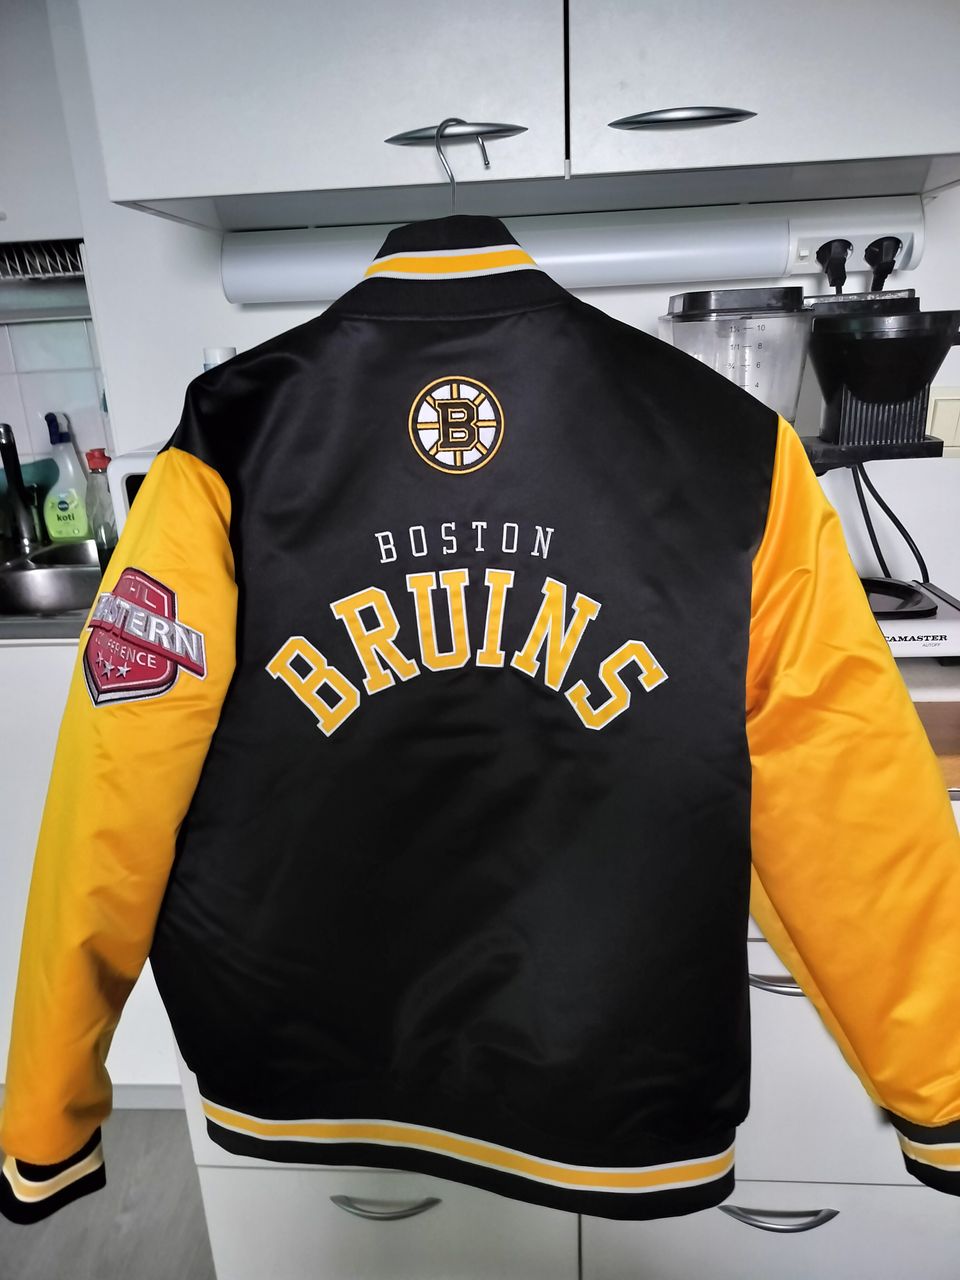 Boston Bruins rotsi